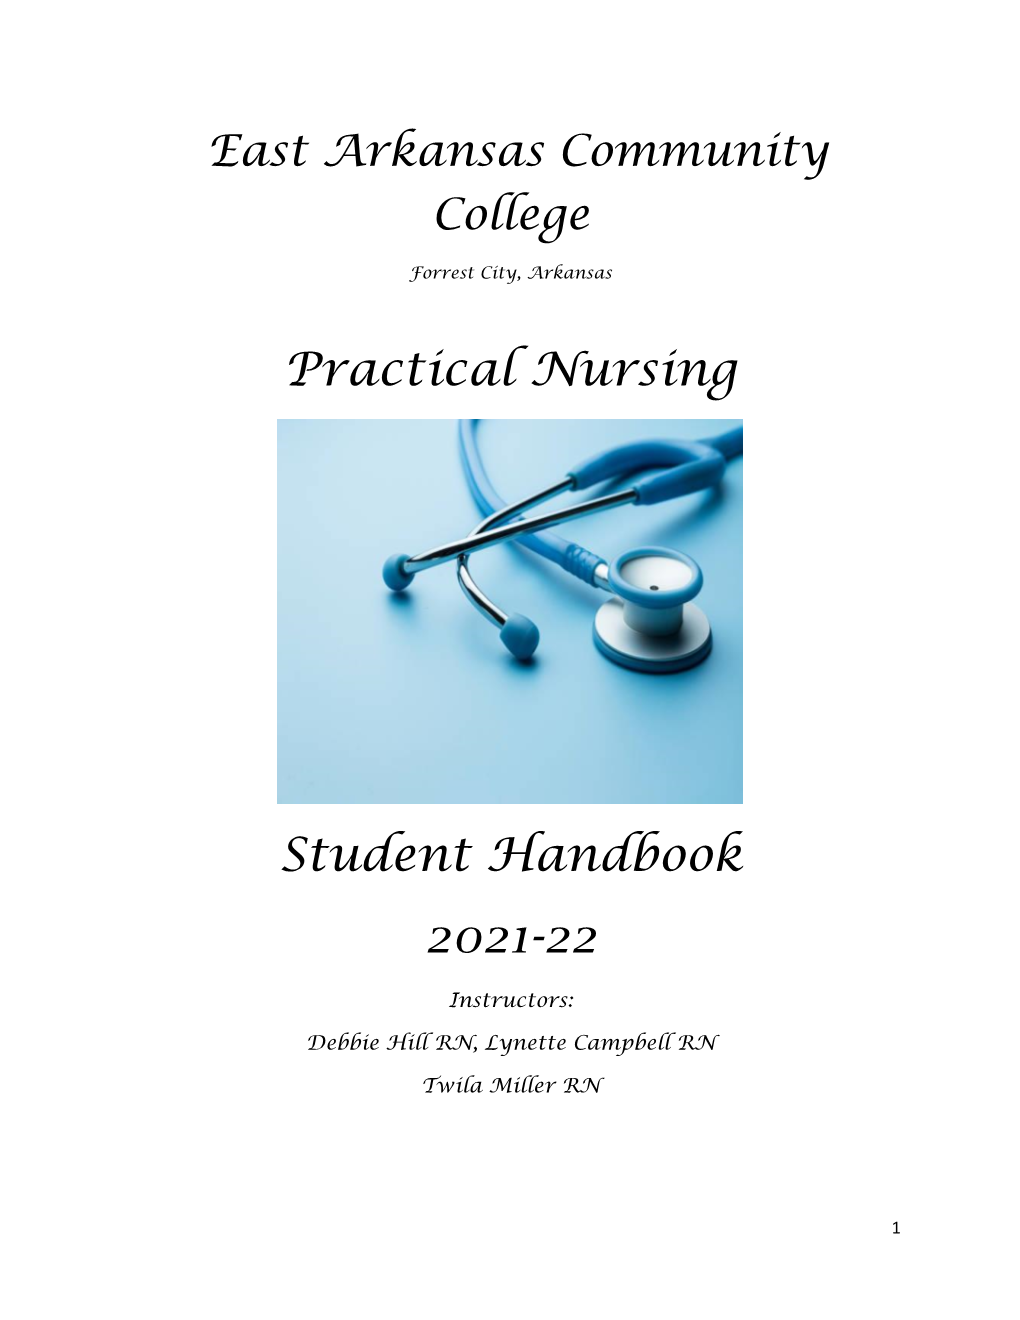 Practical Nursing Clinical Handbook